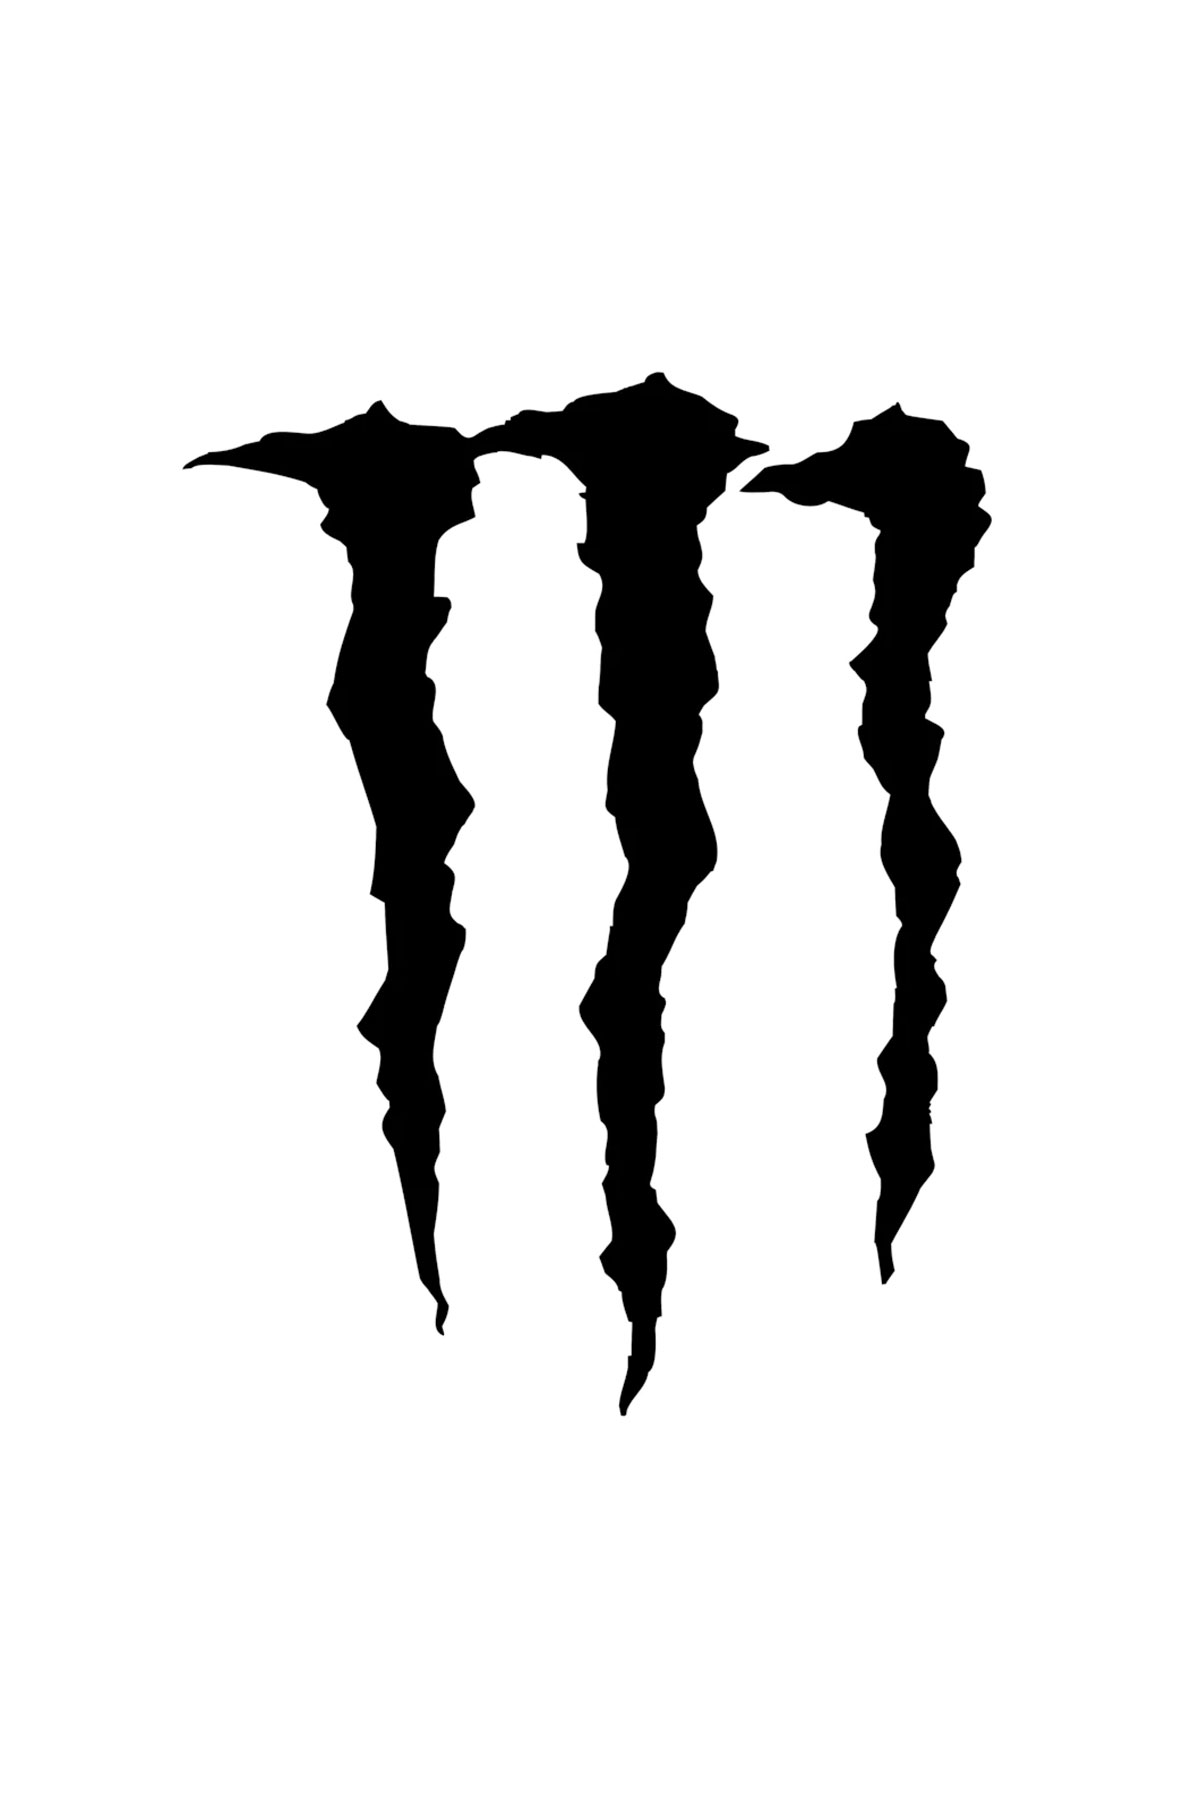 Шрифт Monster Energy